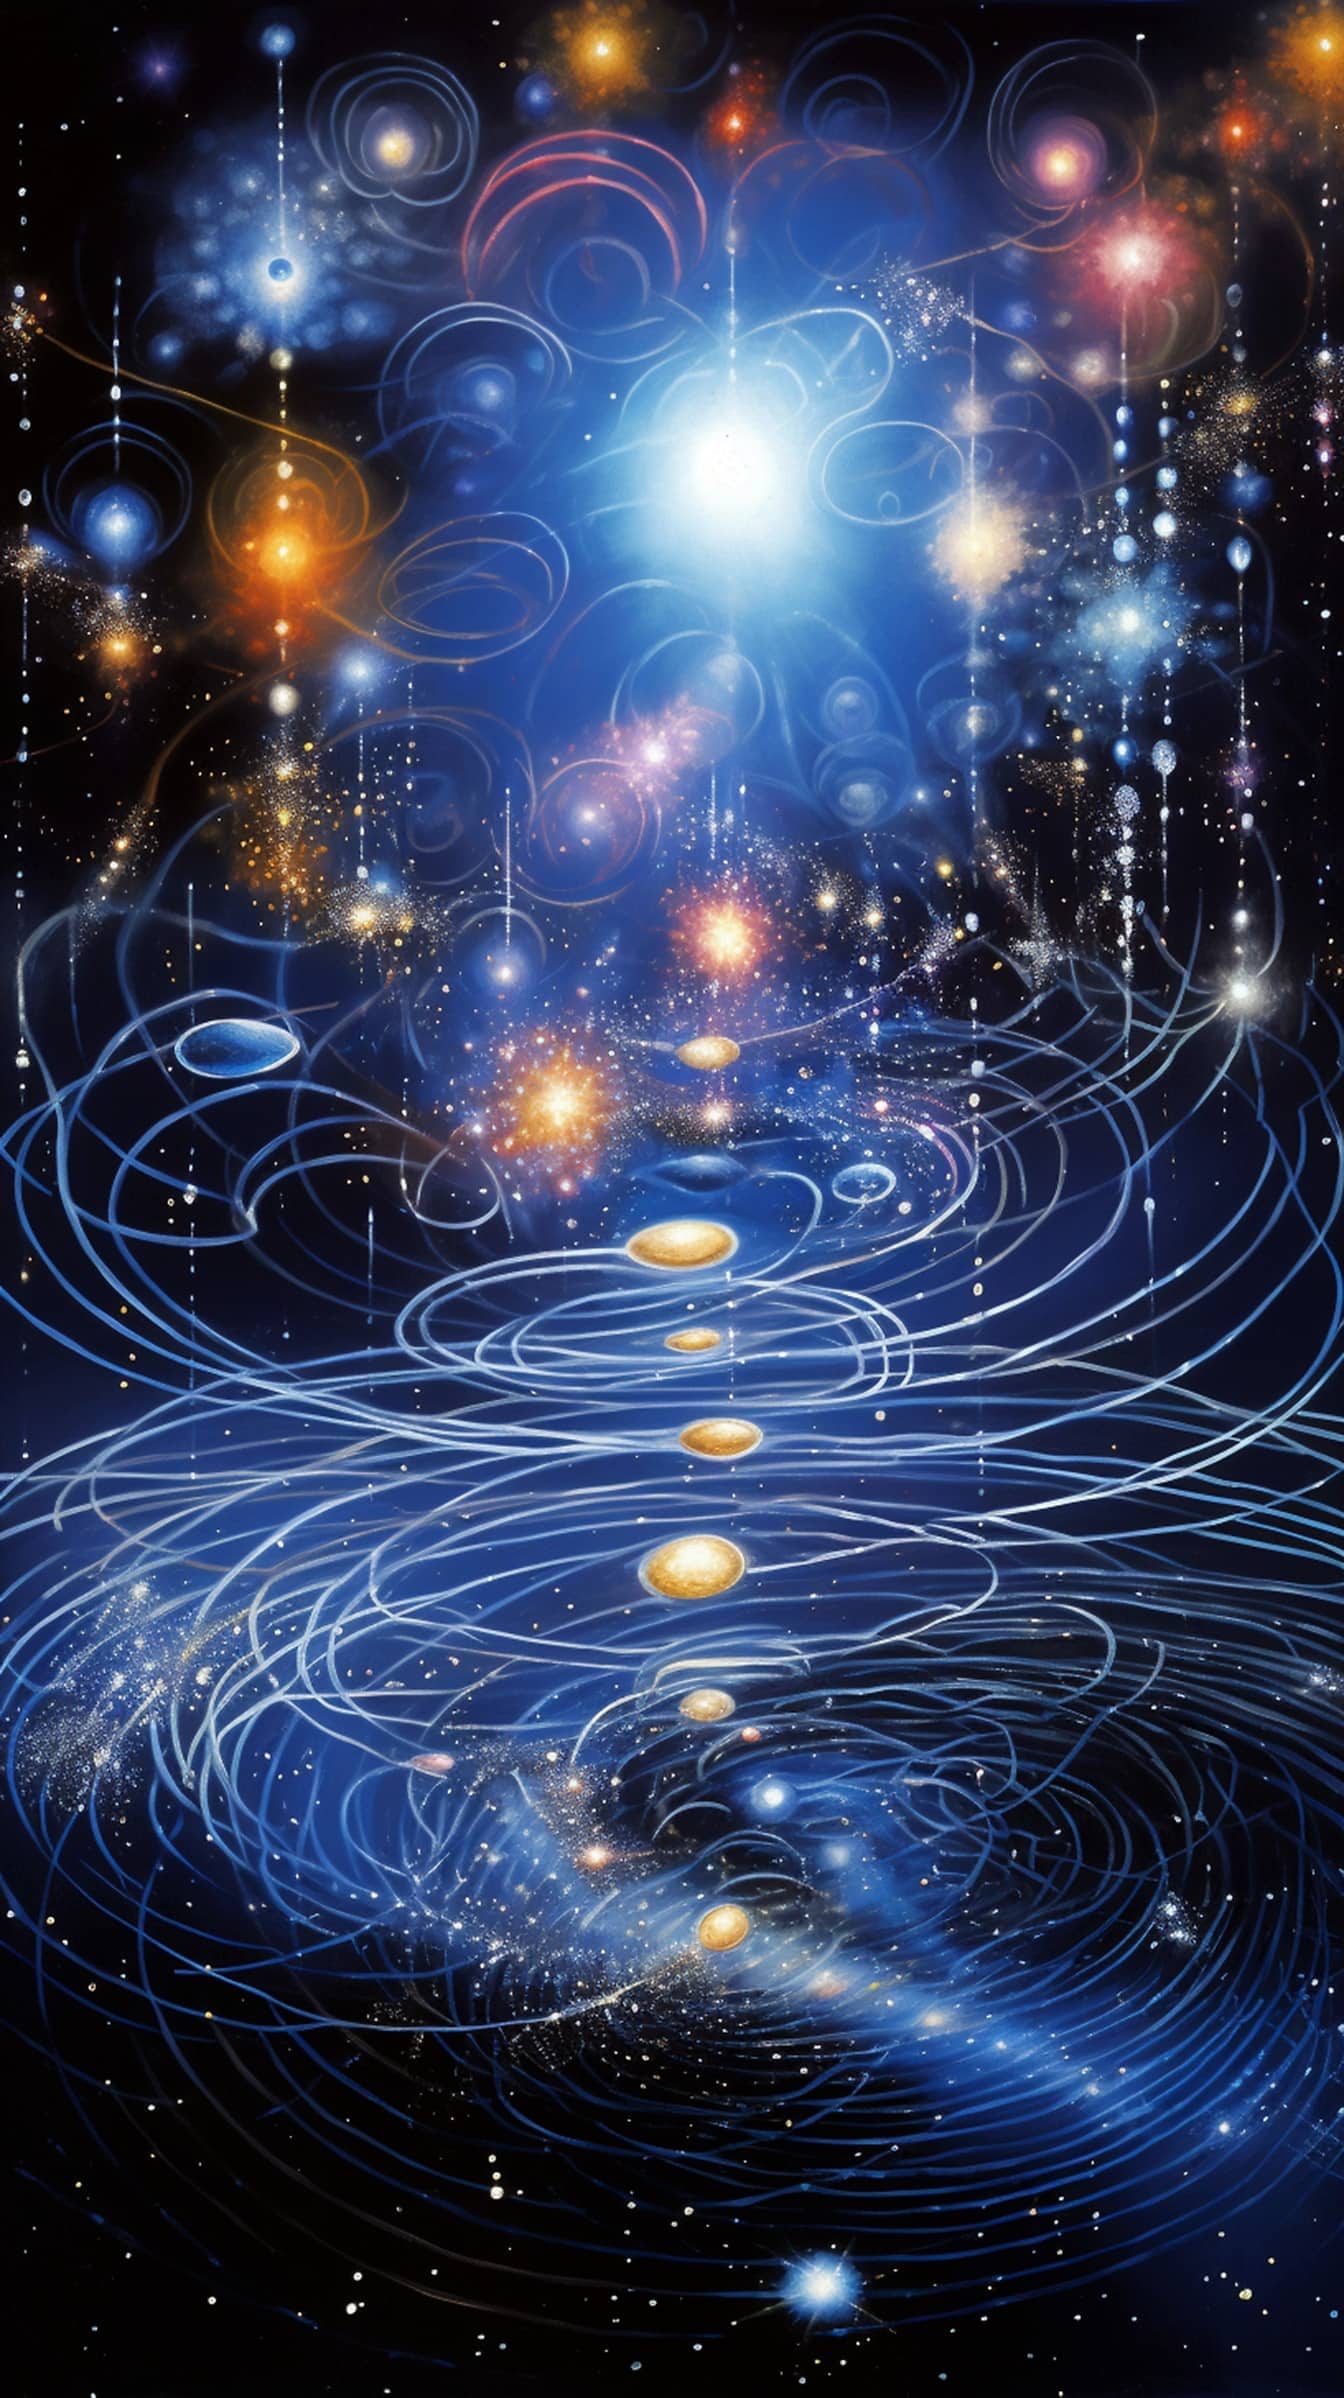 Astrologia energii kosmosu ilustracja wiru